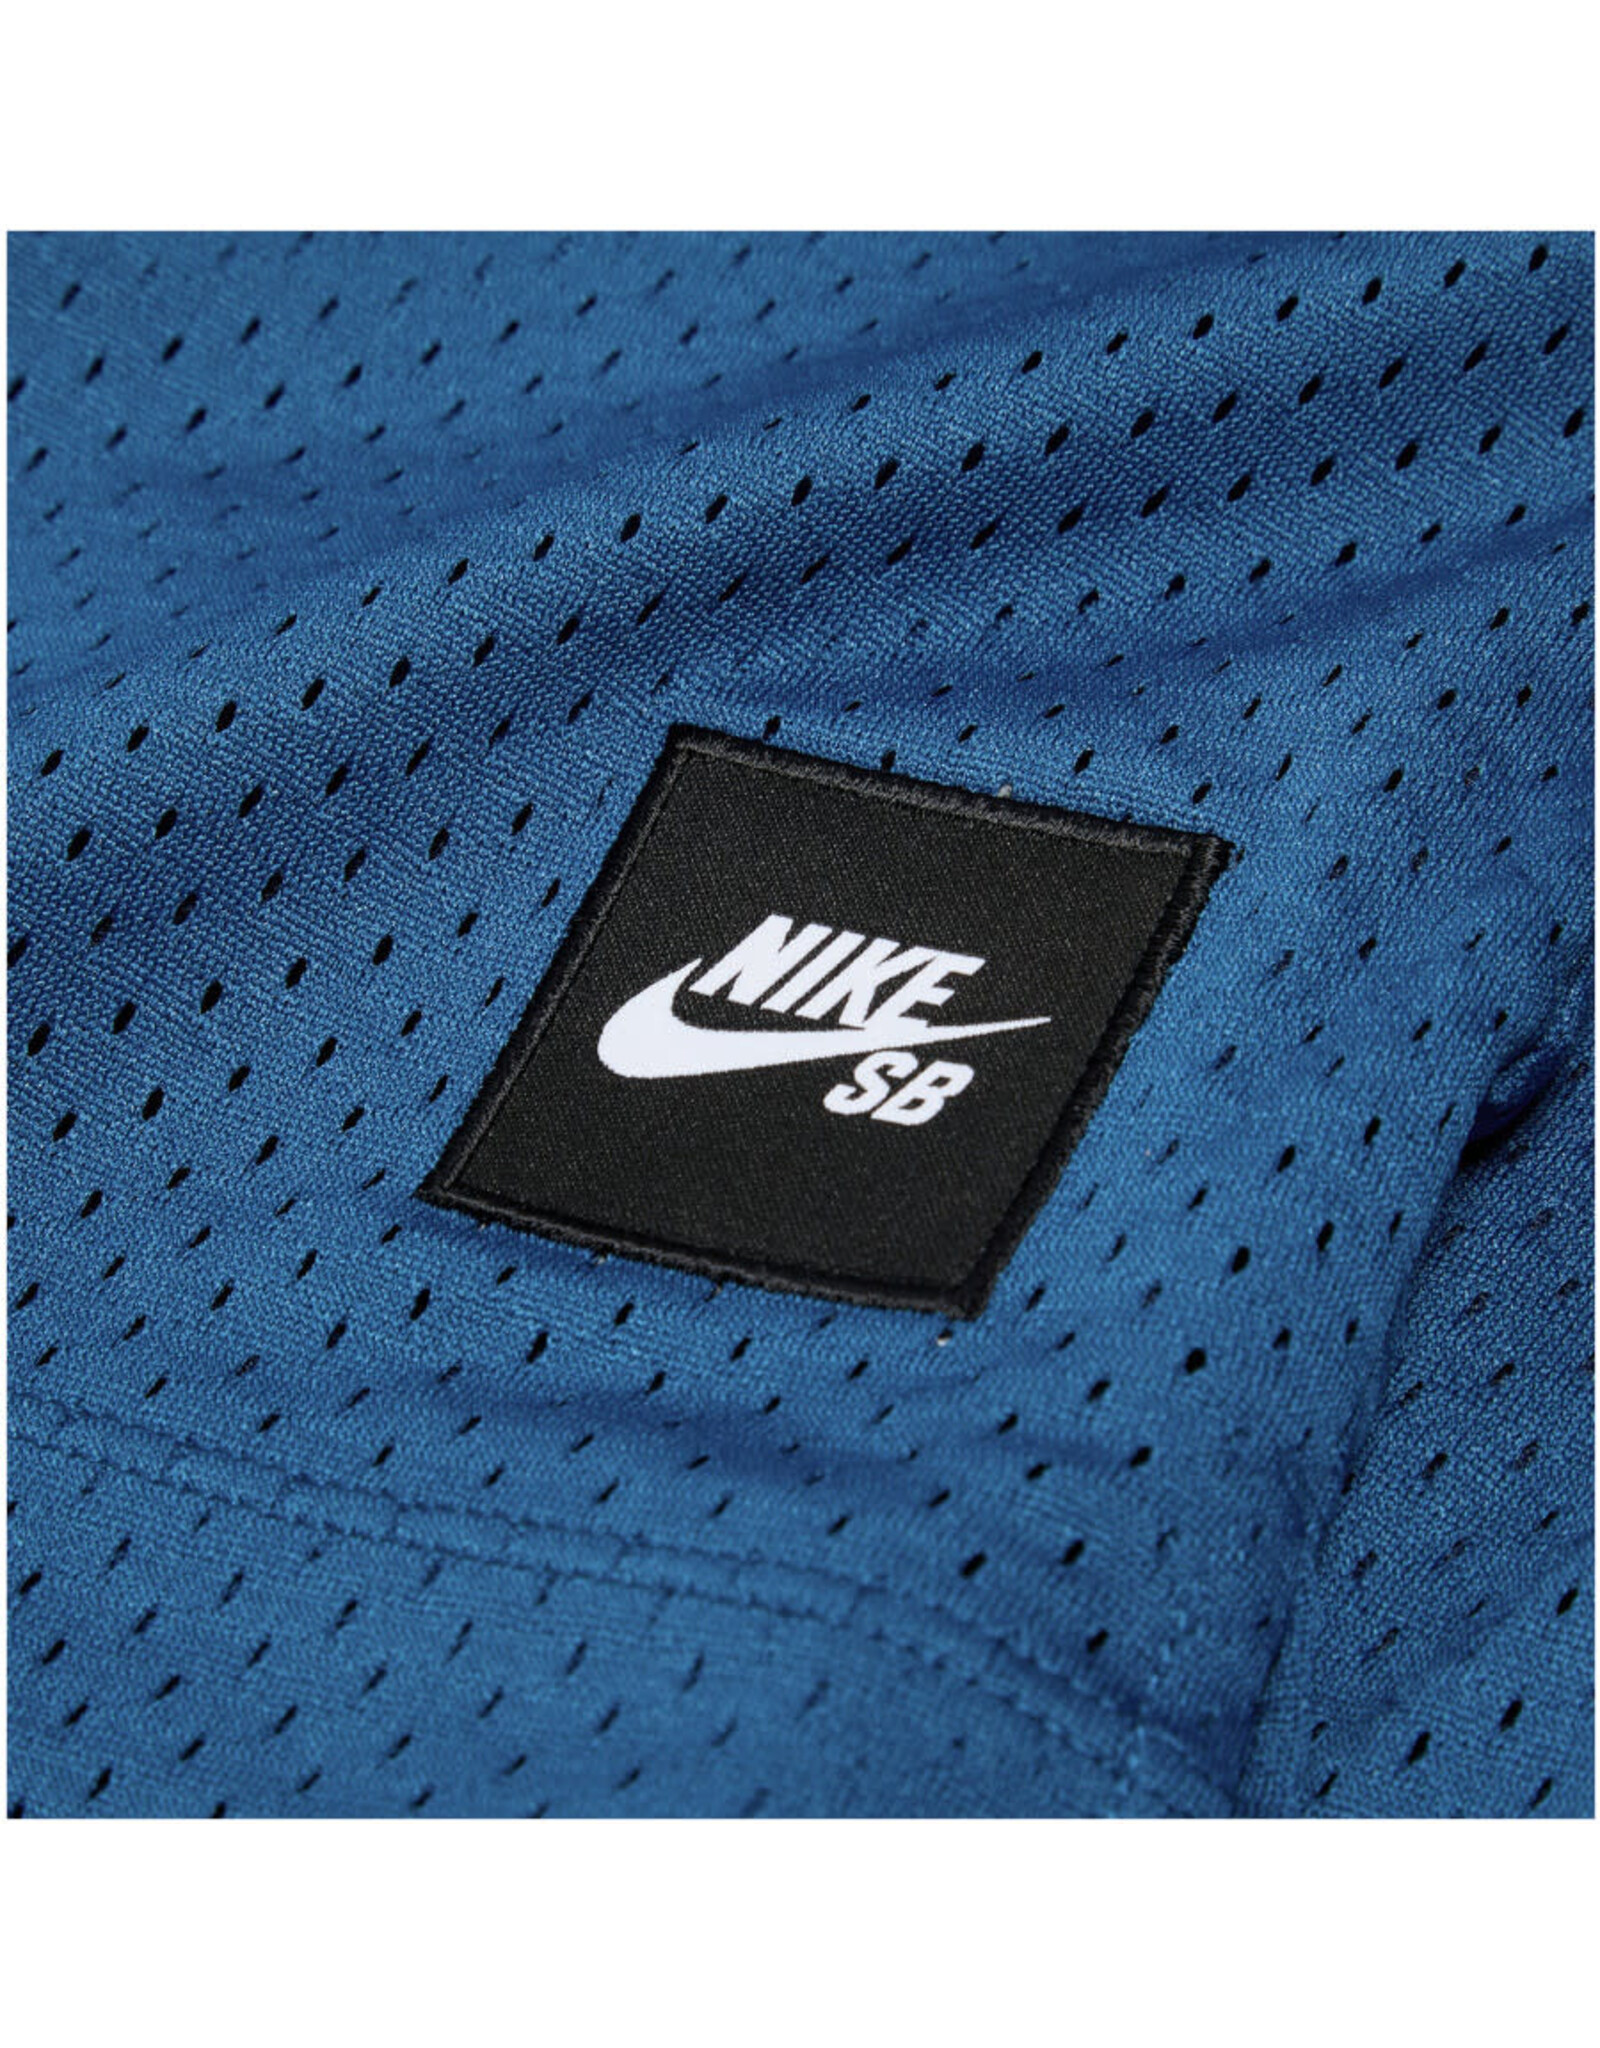 Nike SB Nike SB Shorts Reversible Skate Basketball (Midnight Navy/Court Blue)